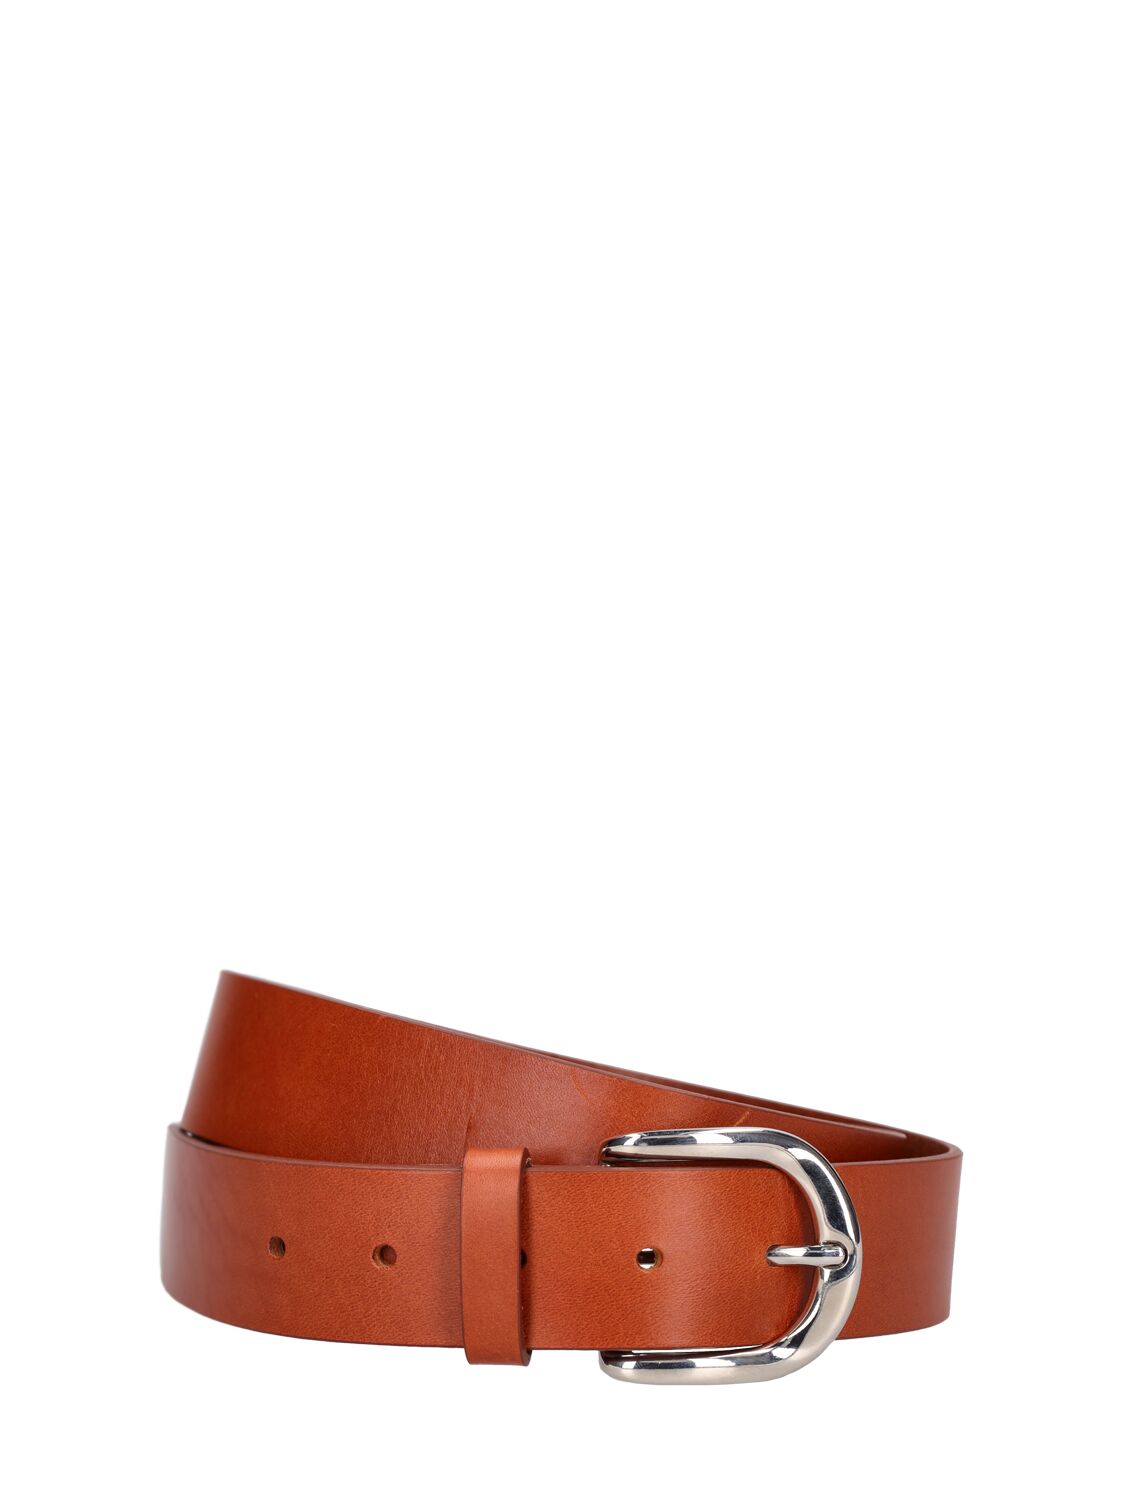 3.5cm Zaph Leather Belt